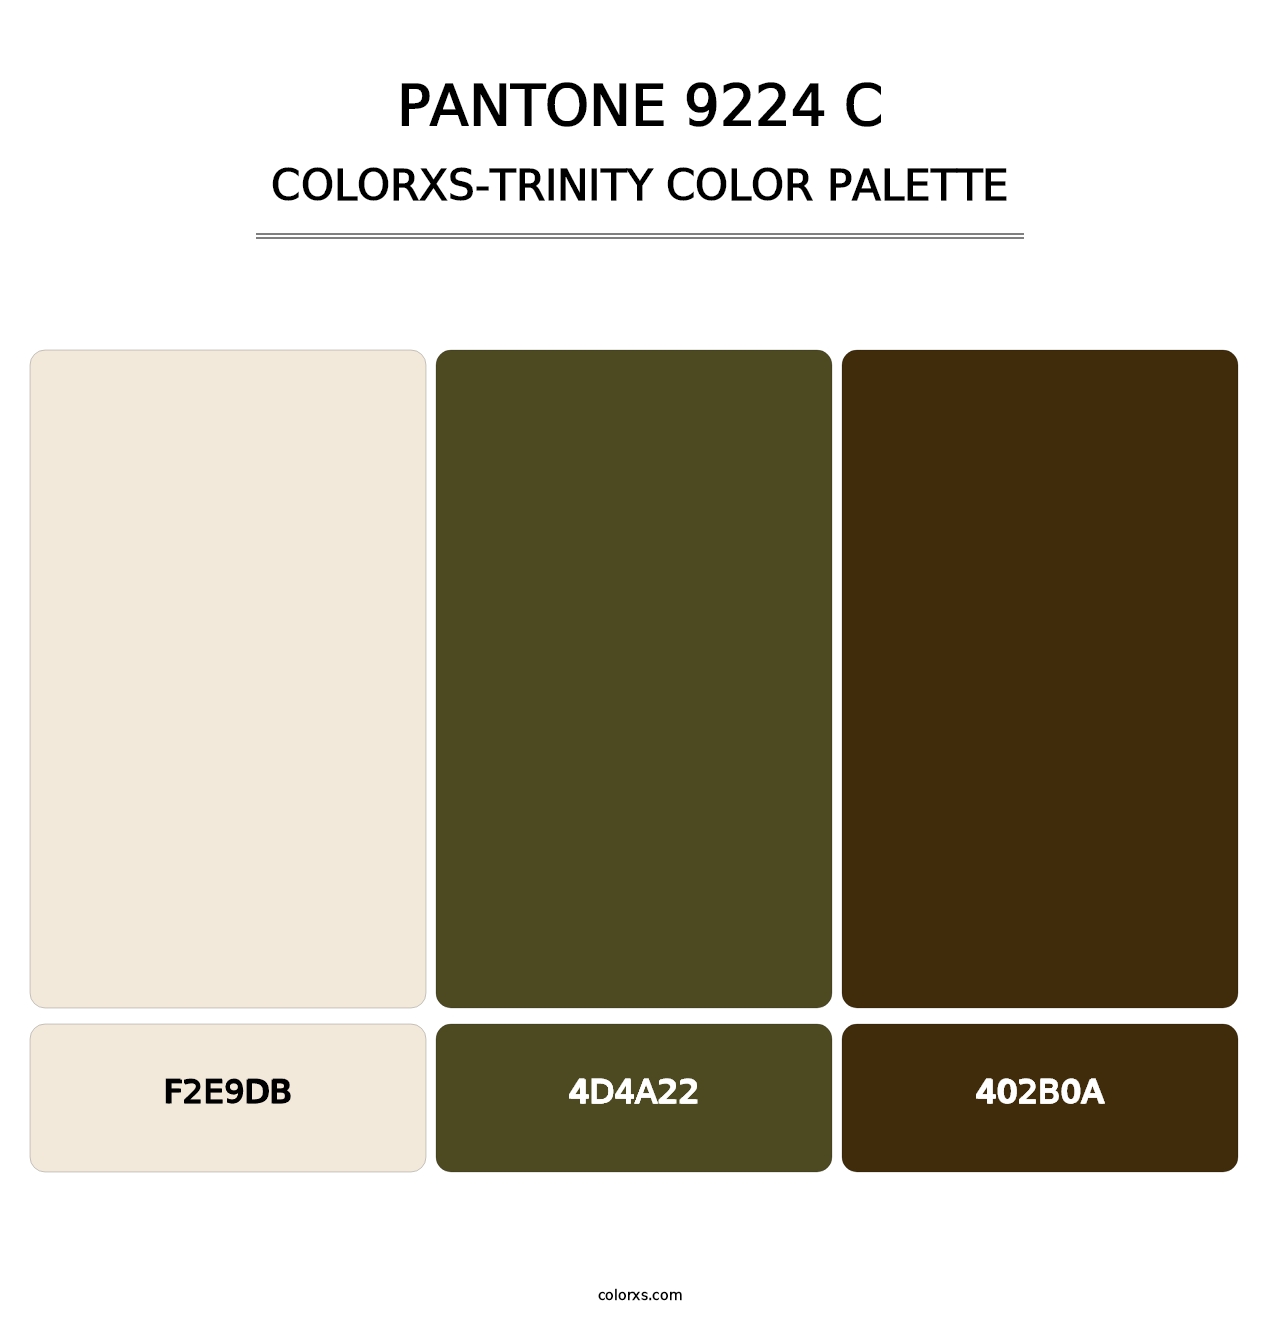 PANTONE 9224 C - Colorxs Trinity Palette